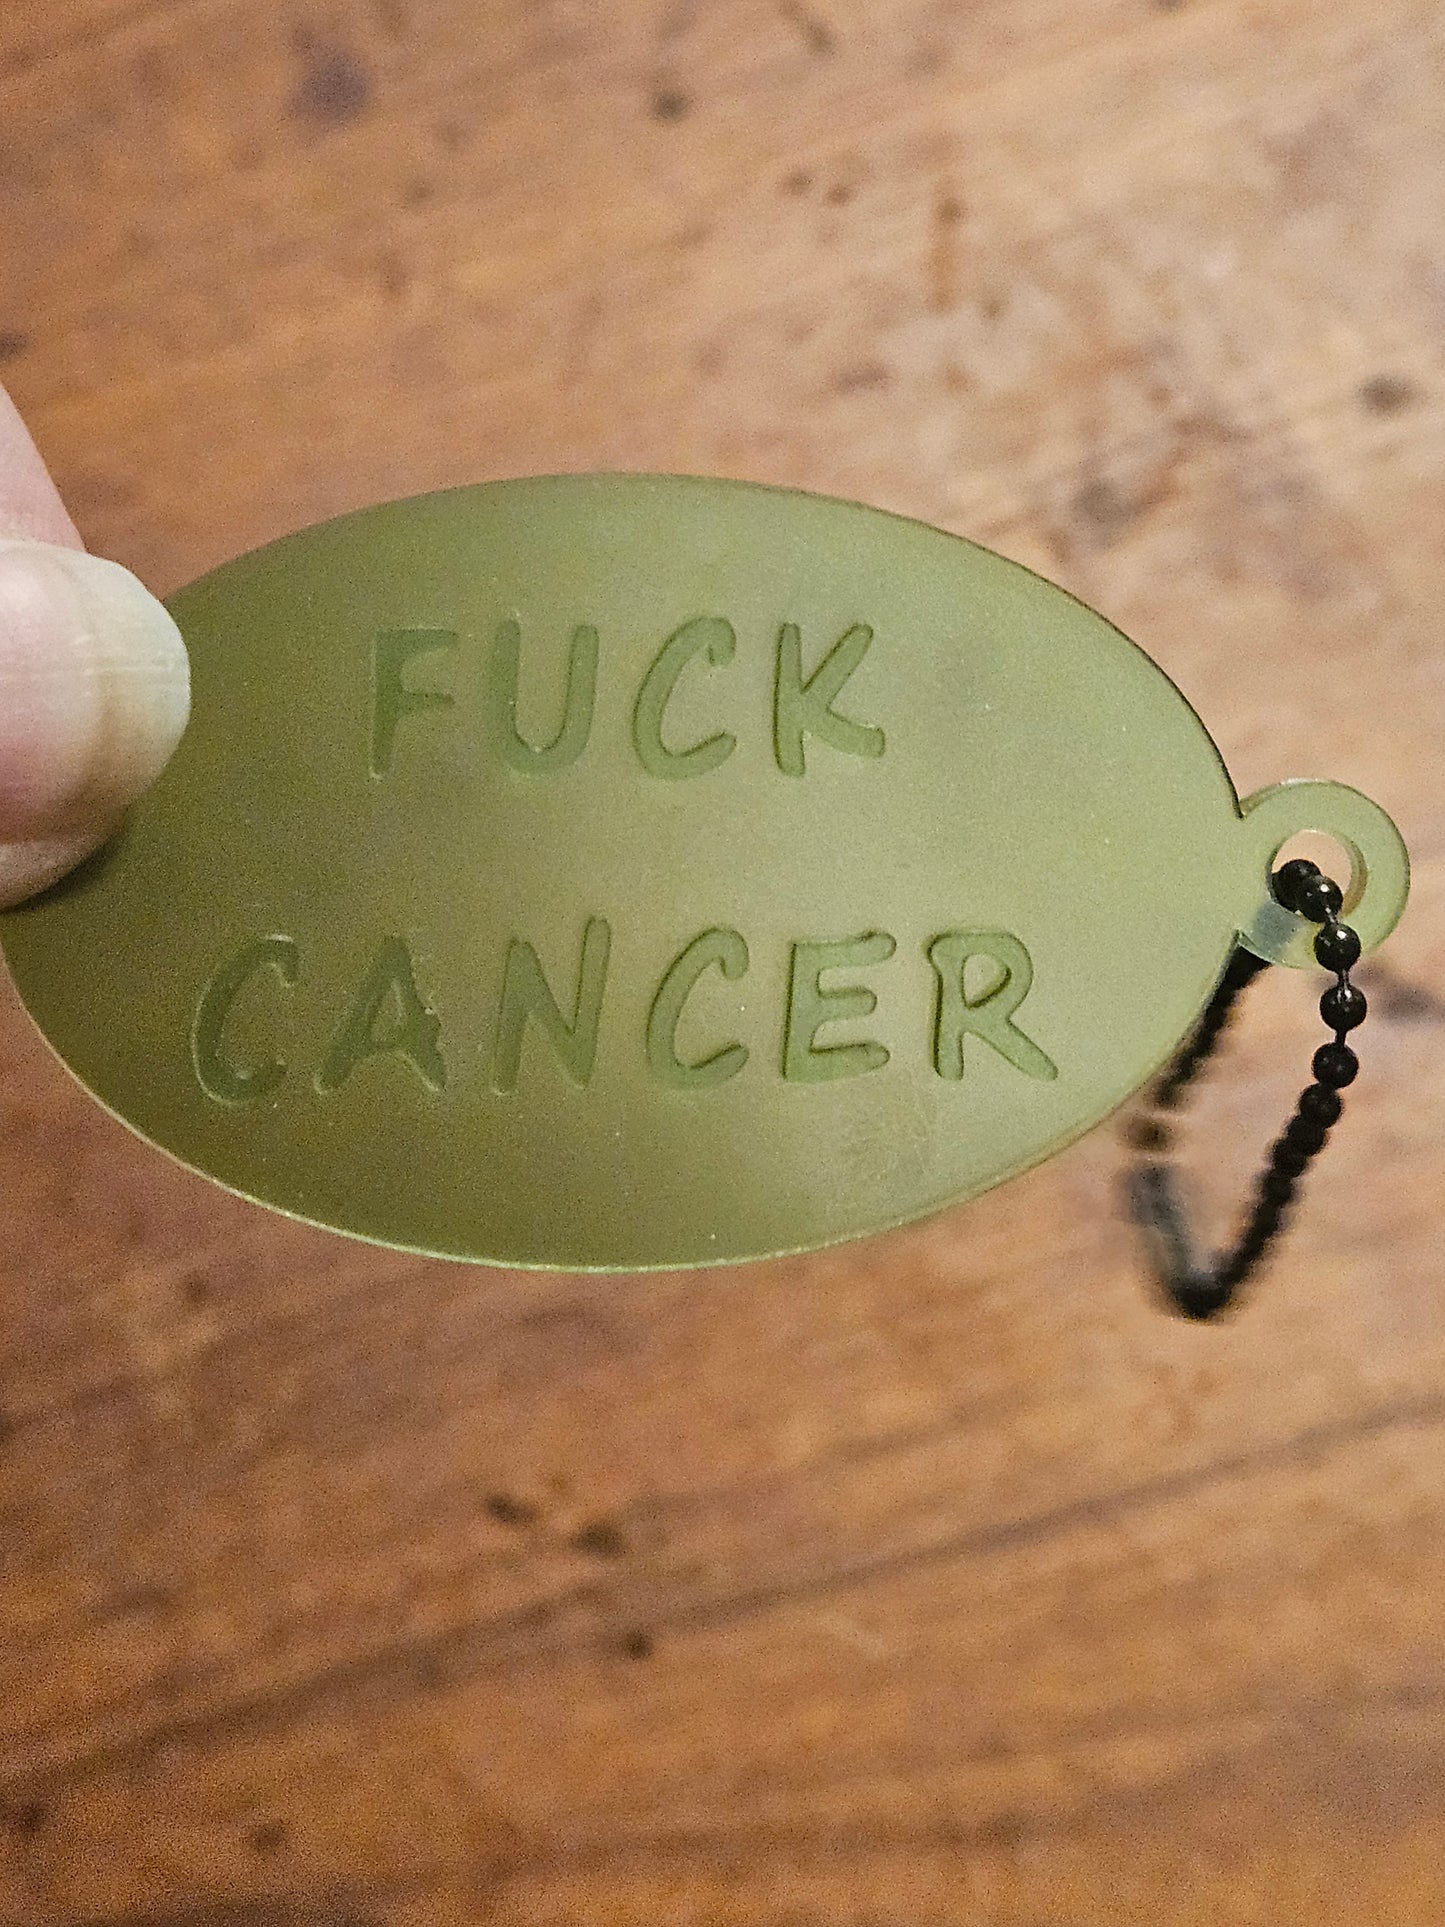 FUCK CANCER keychain